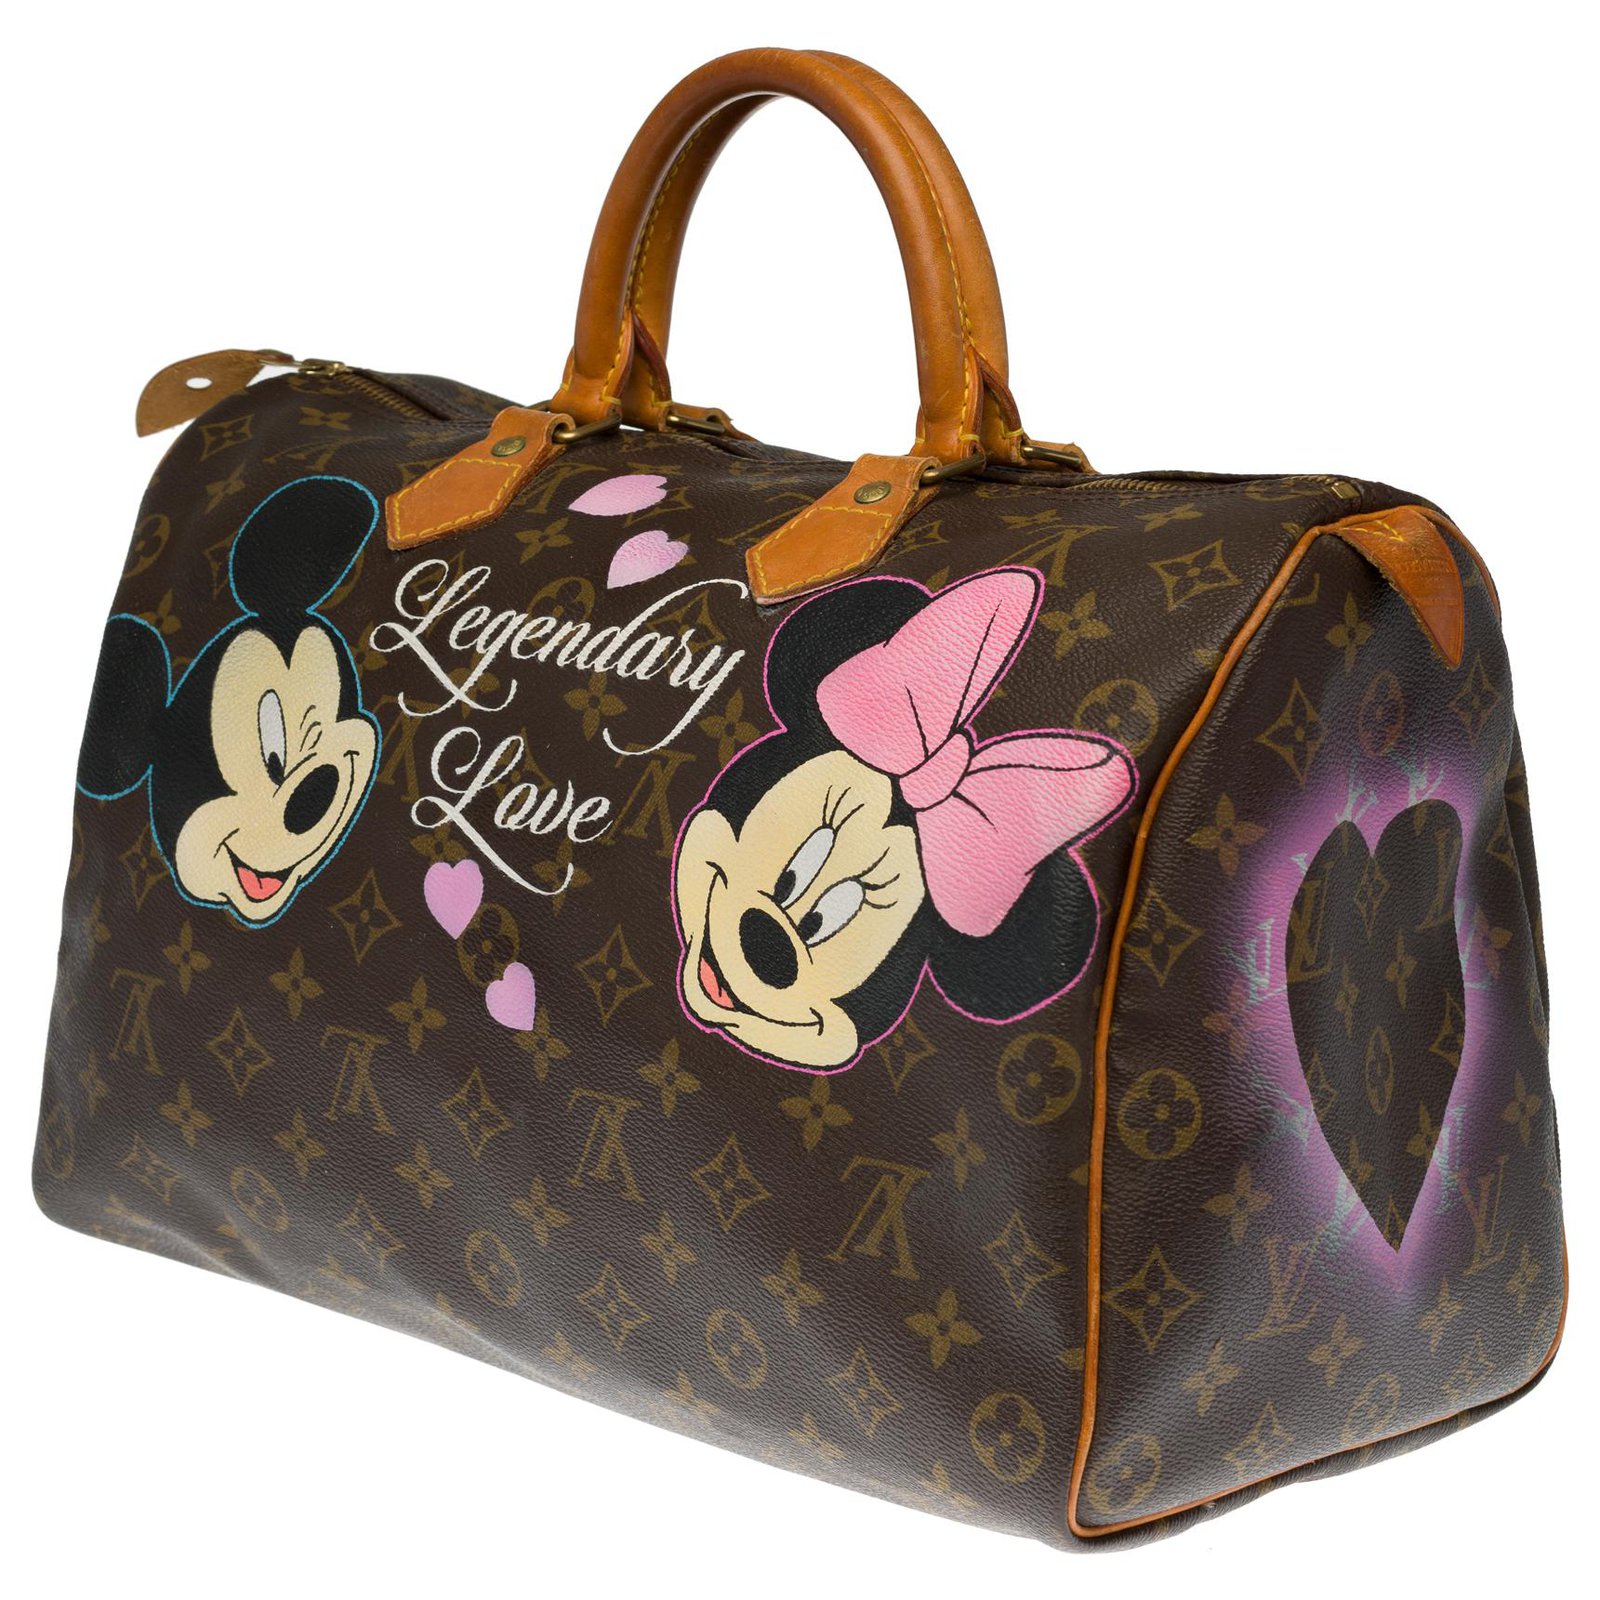 Customized Louis Vuitton Speedy 35 Legendary Love Handbag in Monogram Canvas